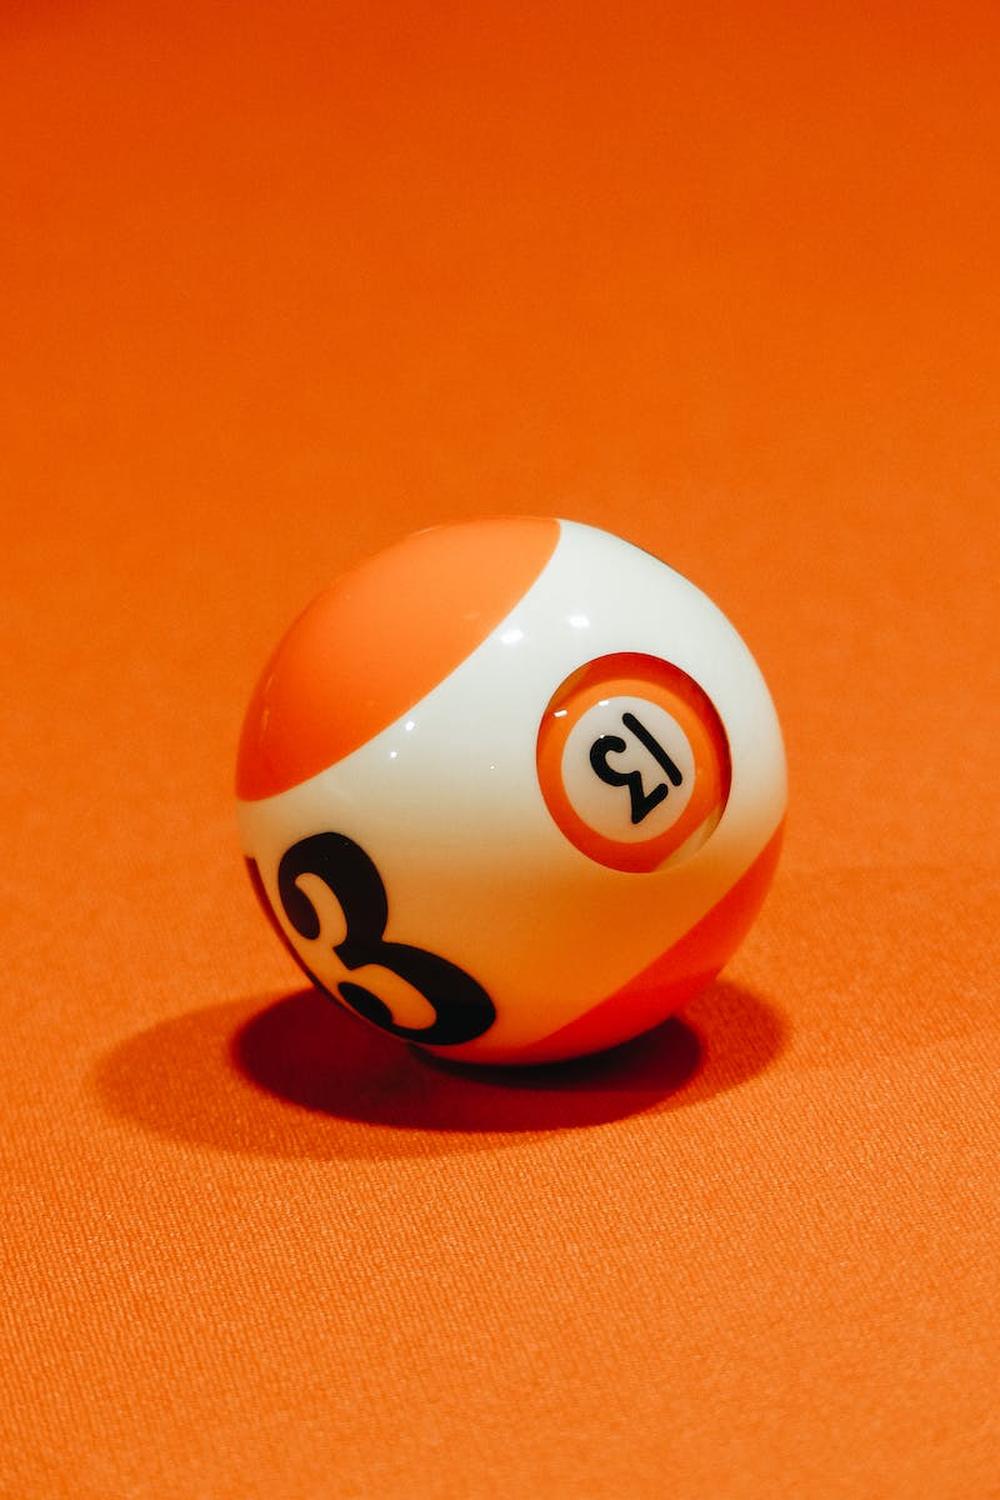 billiard_ball_on_bright_orange_surface